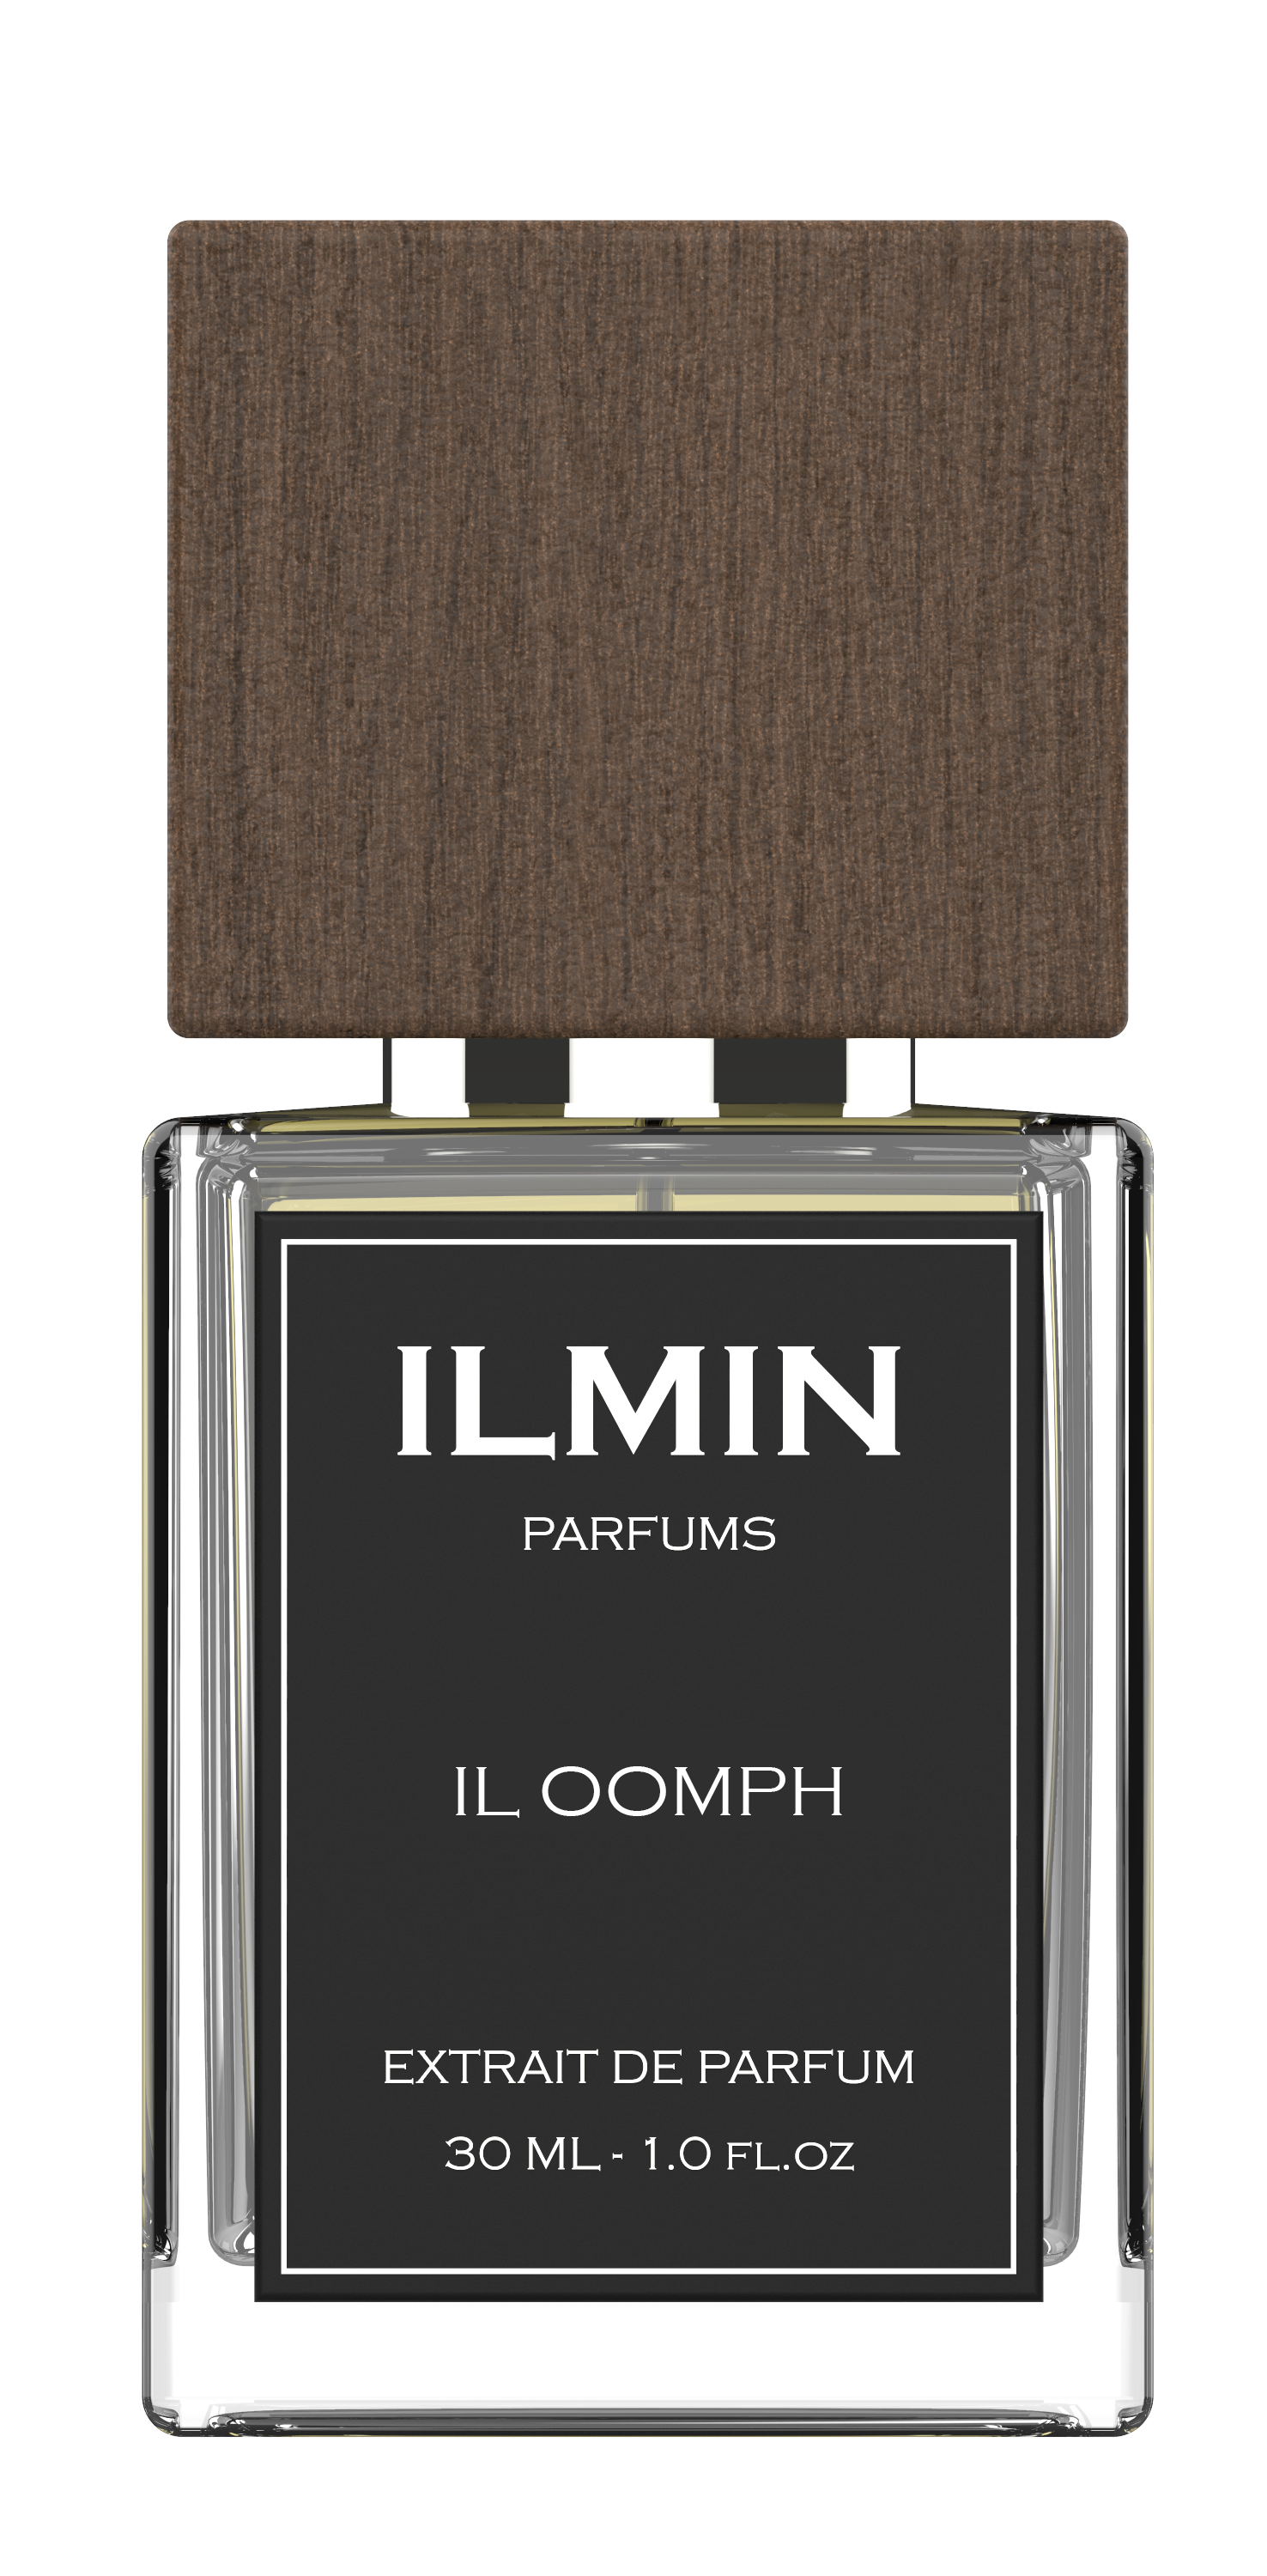 De – / Spray ILMIN 1oz ILMIN Parfum IL OFFICIAL Parfums USA Extrait OOMPH 30ml